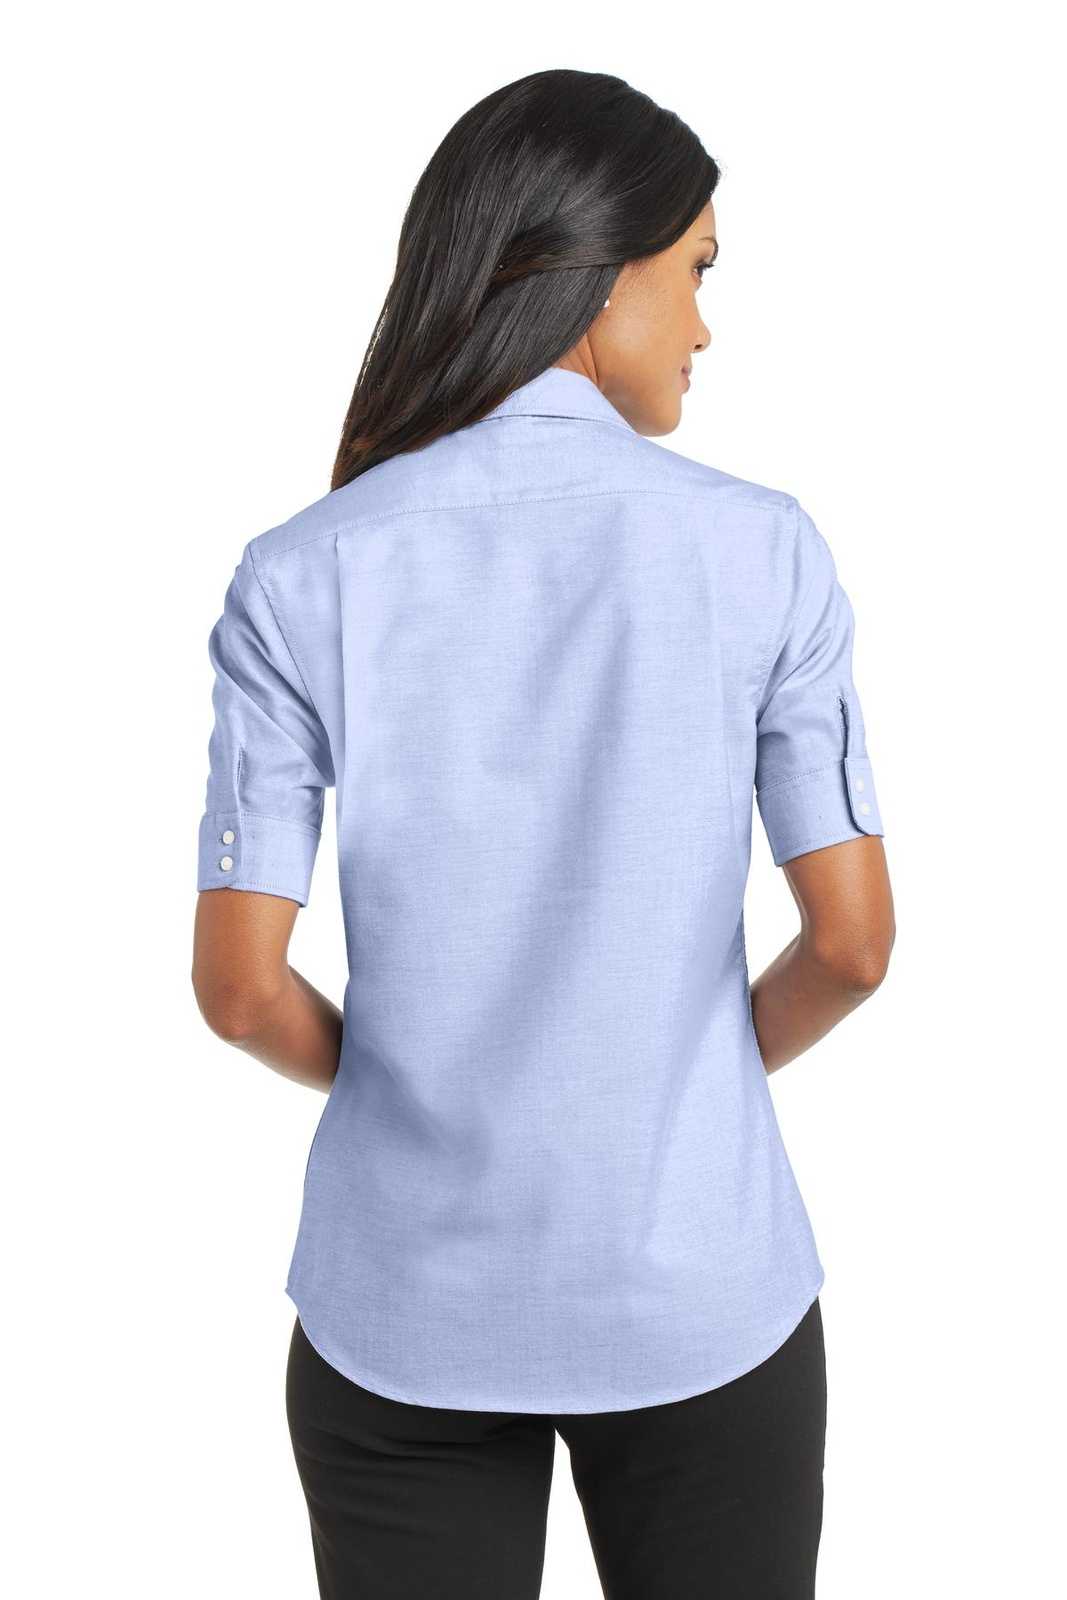 Port Authority L659 Ladies Short Sleeve Superpro Oxford Shirt - Oxford Blue - HIT a Double - 1